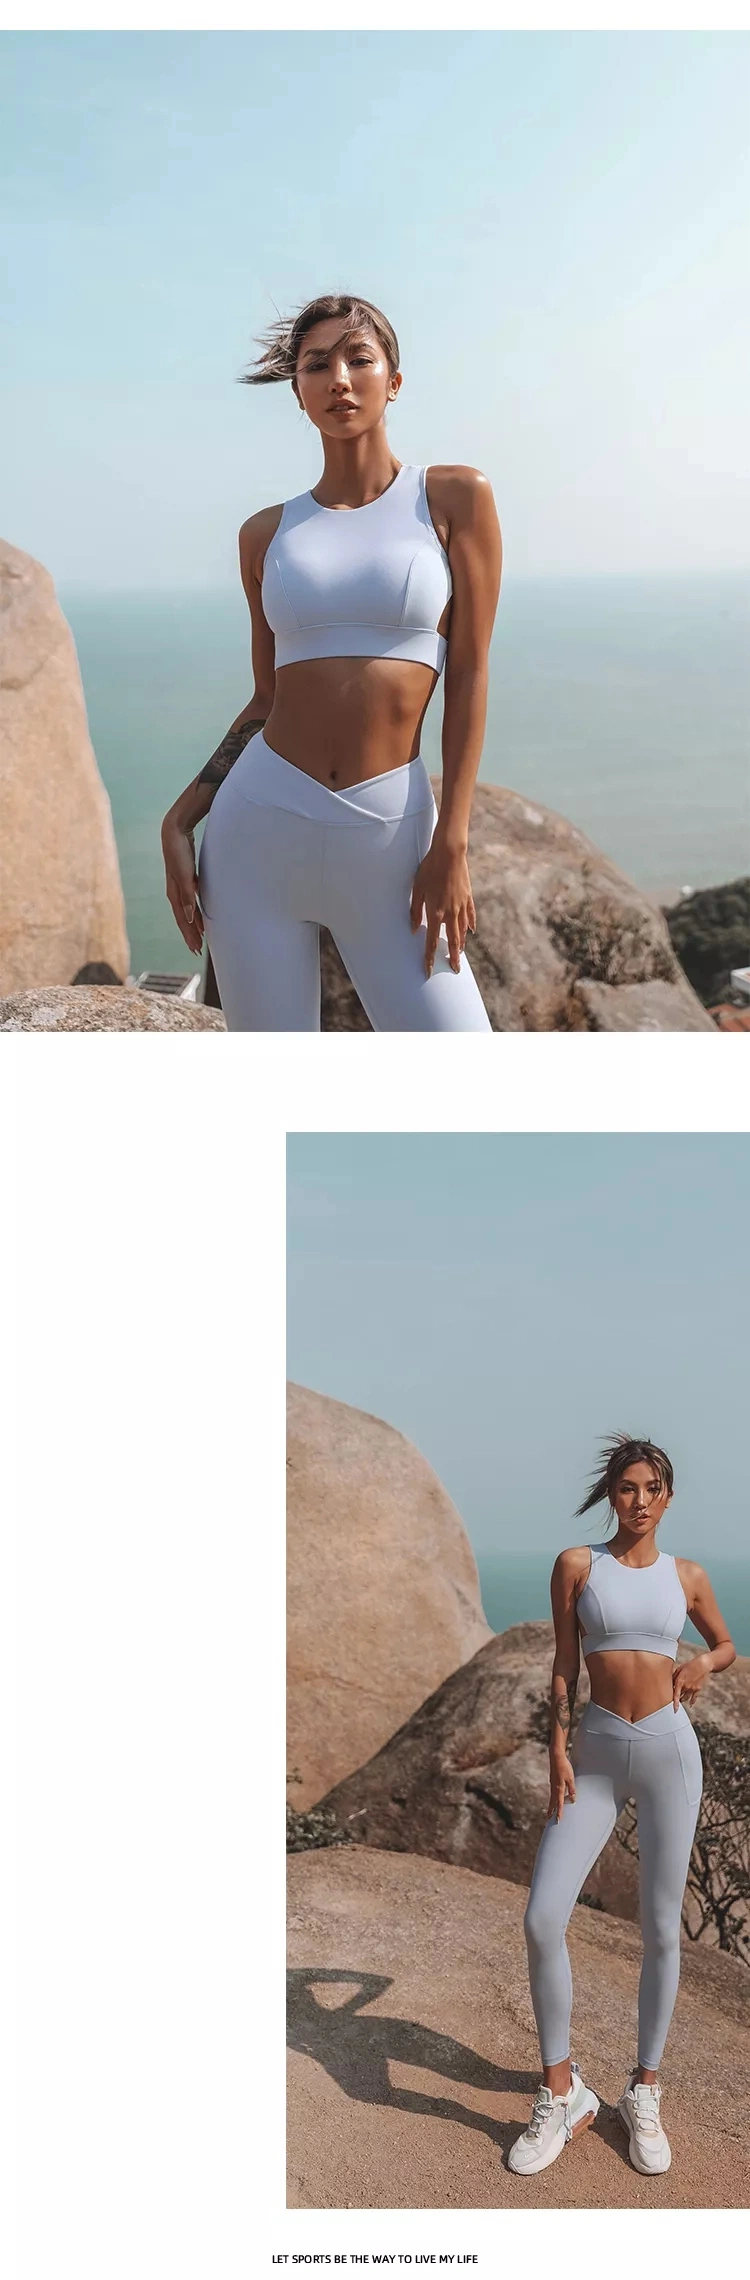 Original Designs Sporstwear Women&prime;s Yoga Fitness Gym Set Breathable Squat Proof Yoga Wear Leggings